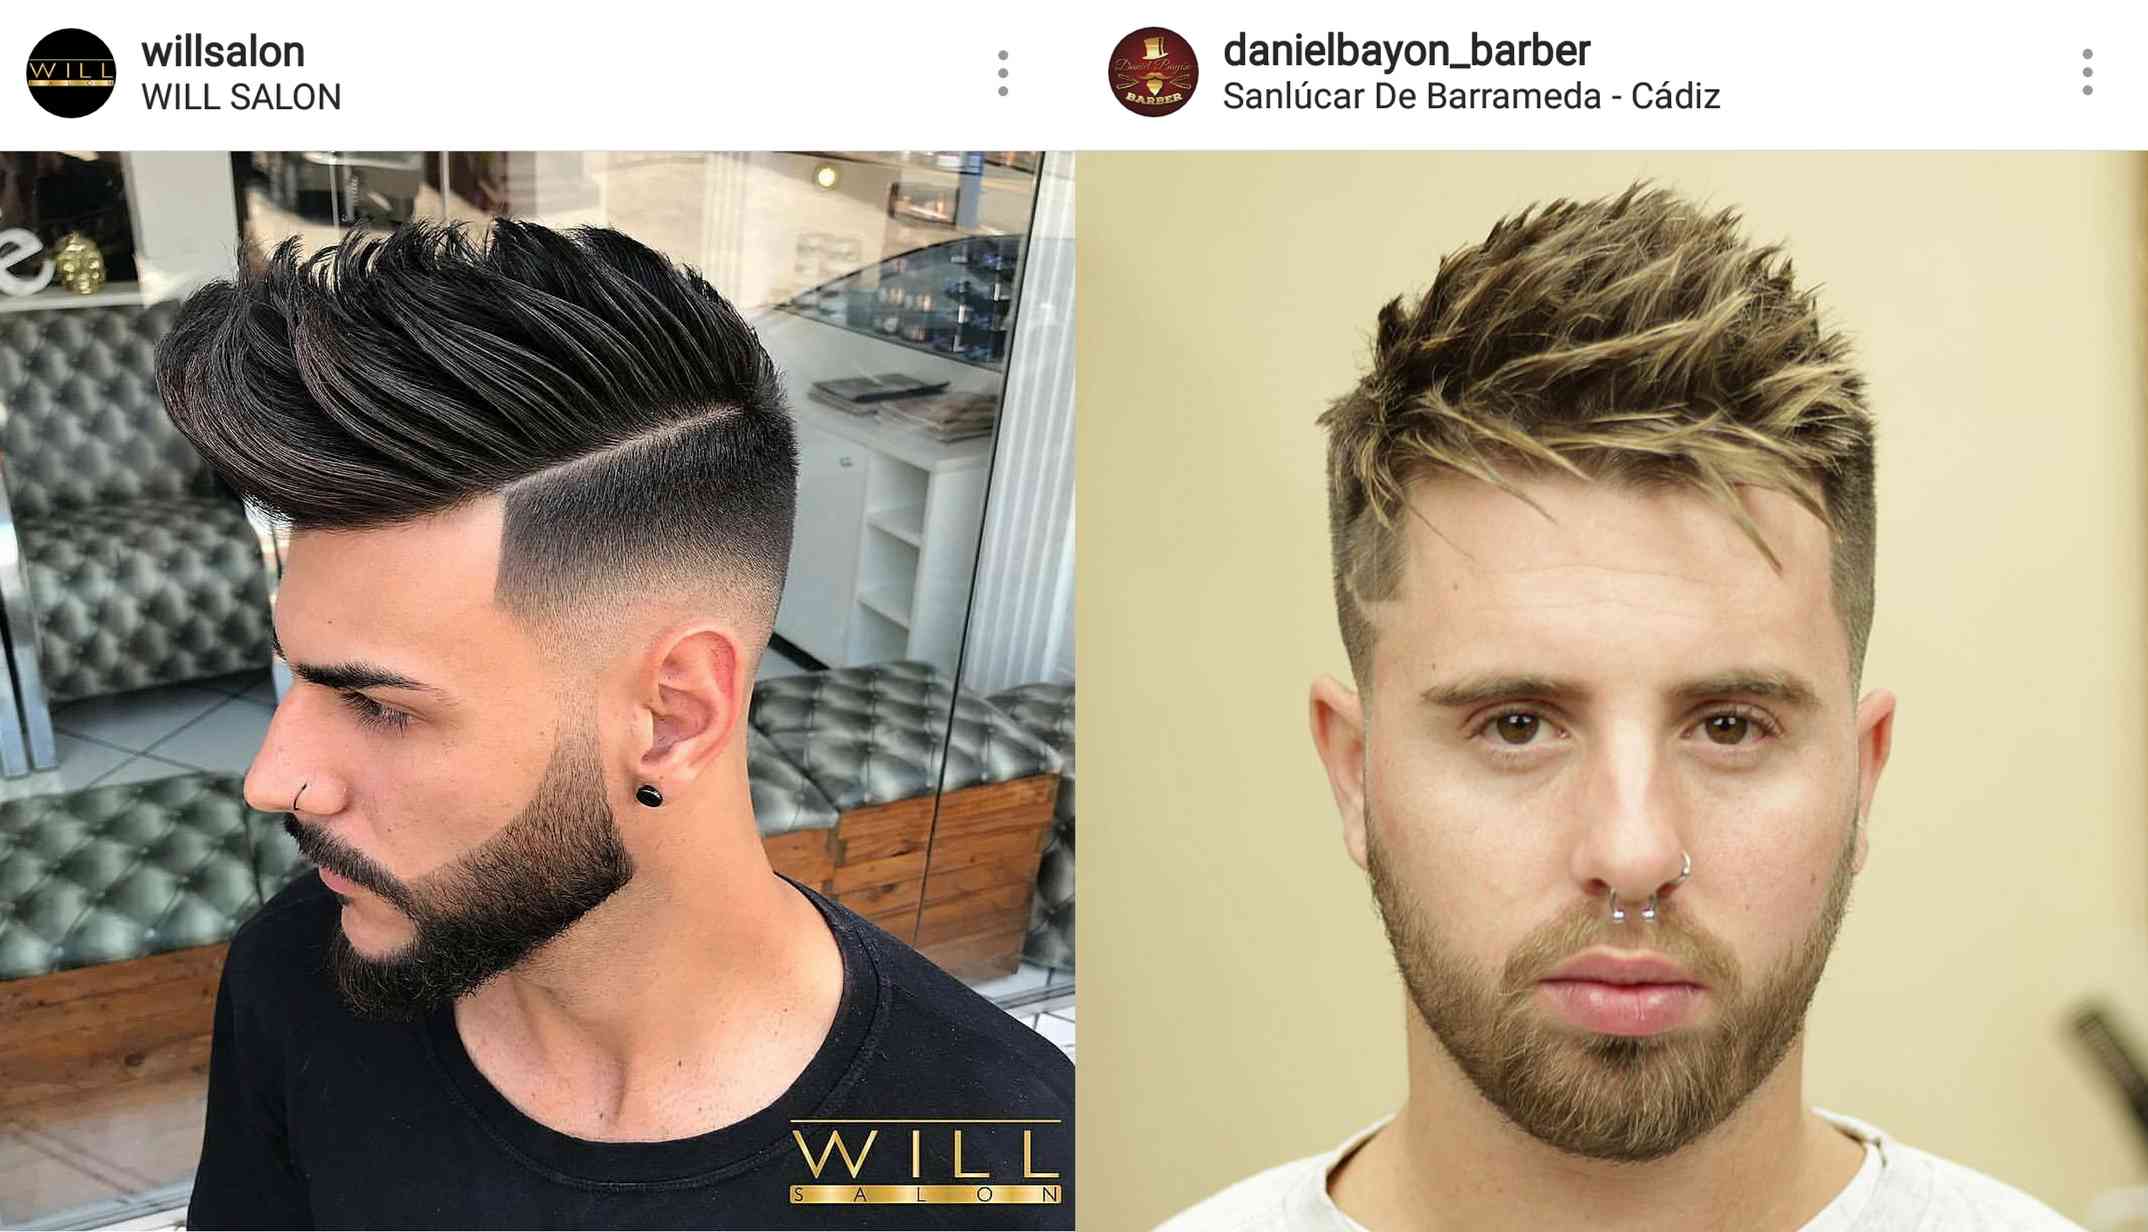 melhores cortes de cabelo 2018 masculino